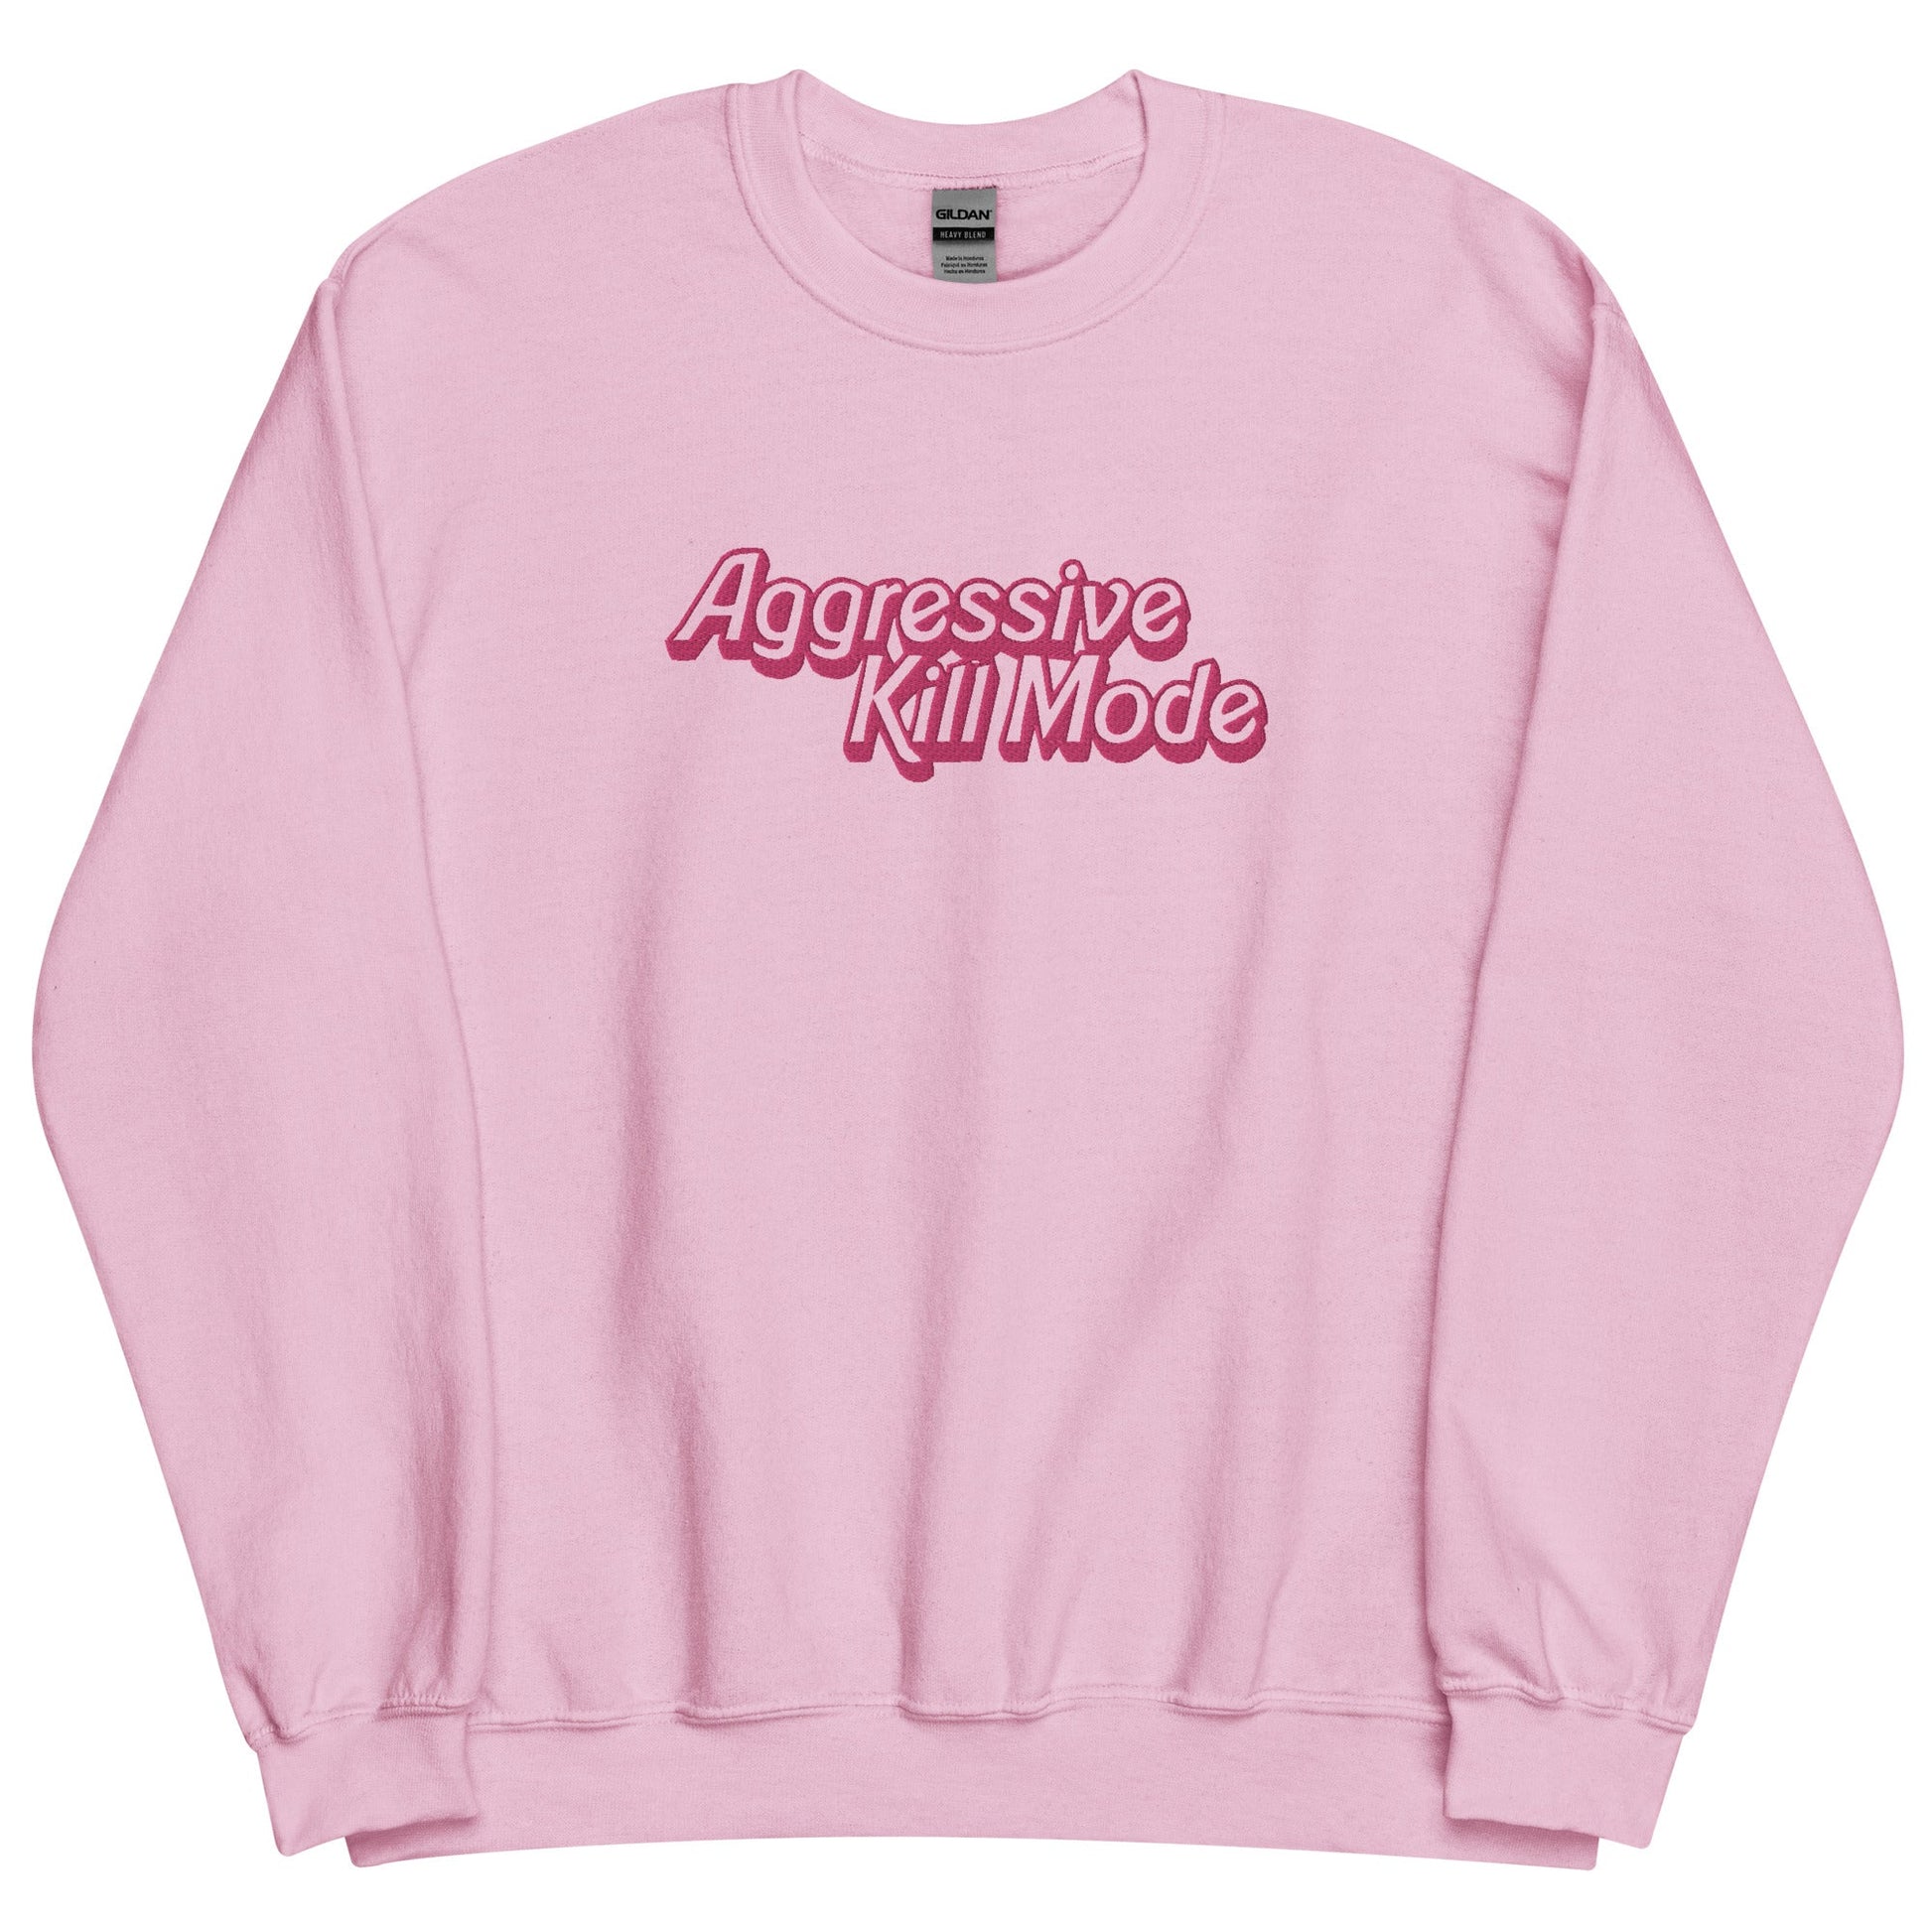 Aggressive Kill Mode Sweatshirt - twogirls1formula